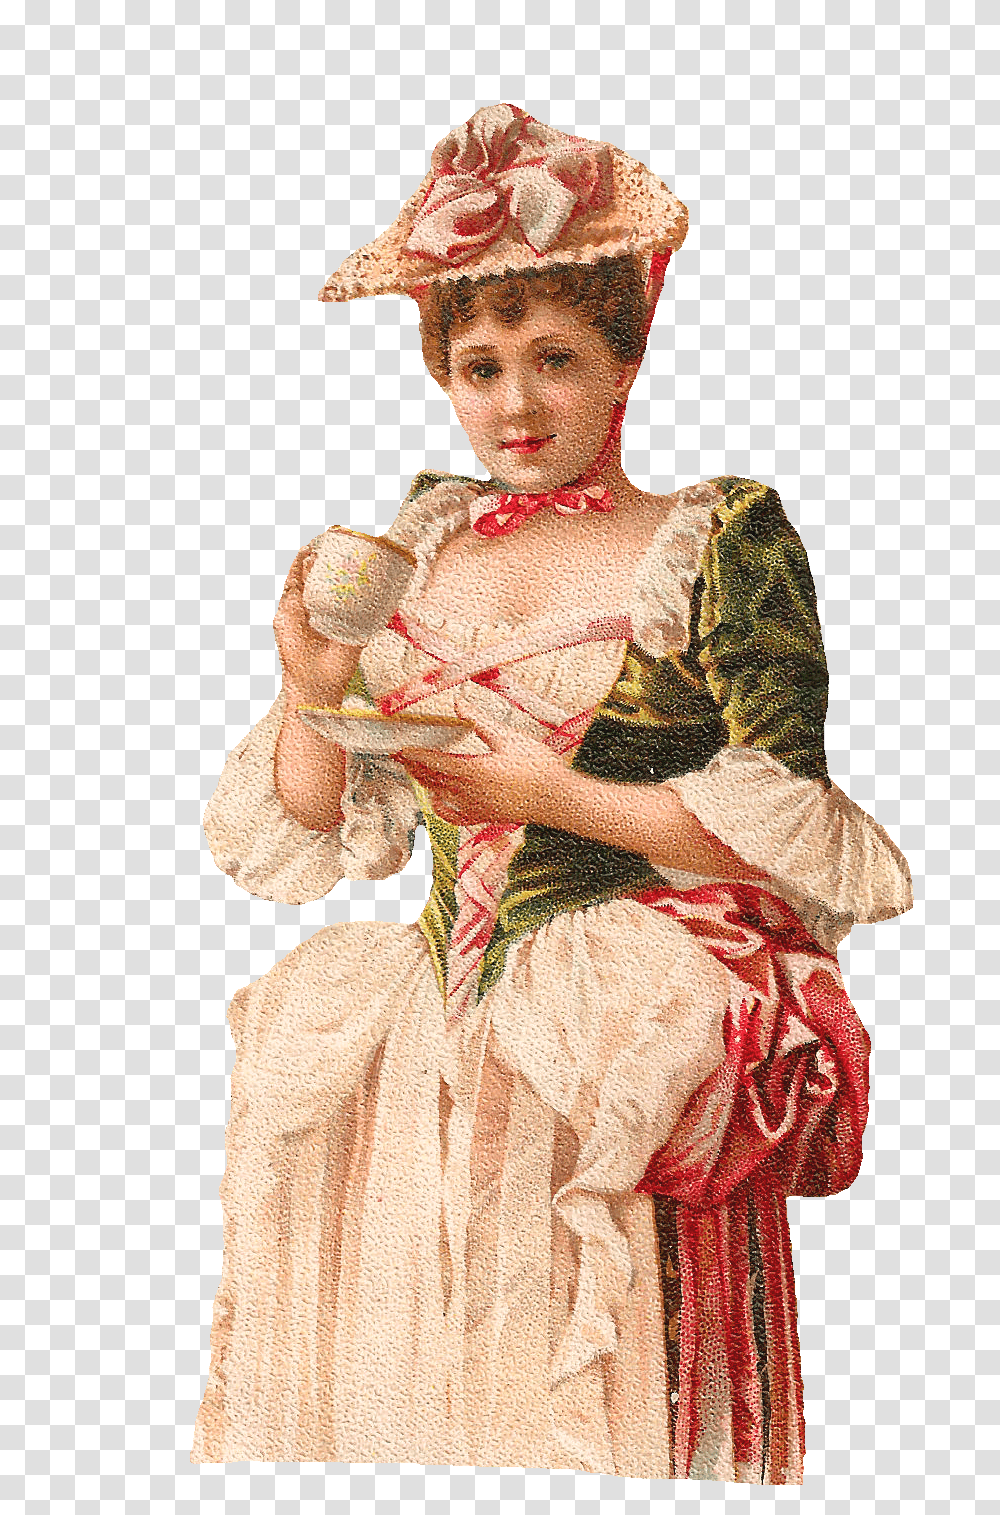 Woman Drinking Tea Clip Art Vintage Ladies Drinking Tea, Costume, Dance Pose, Leisure Activities Transparent Png